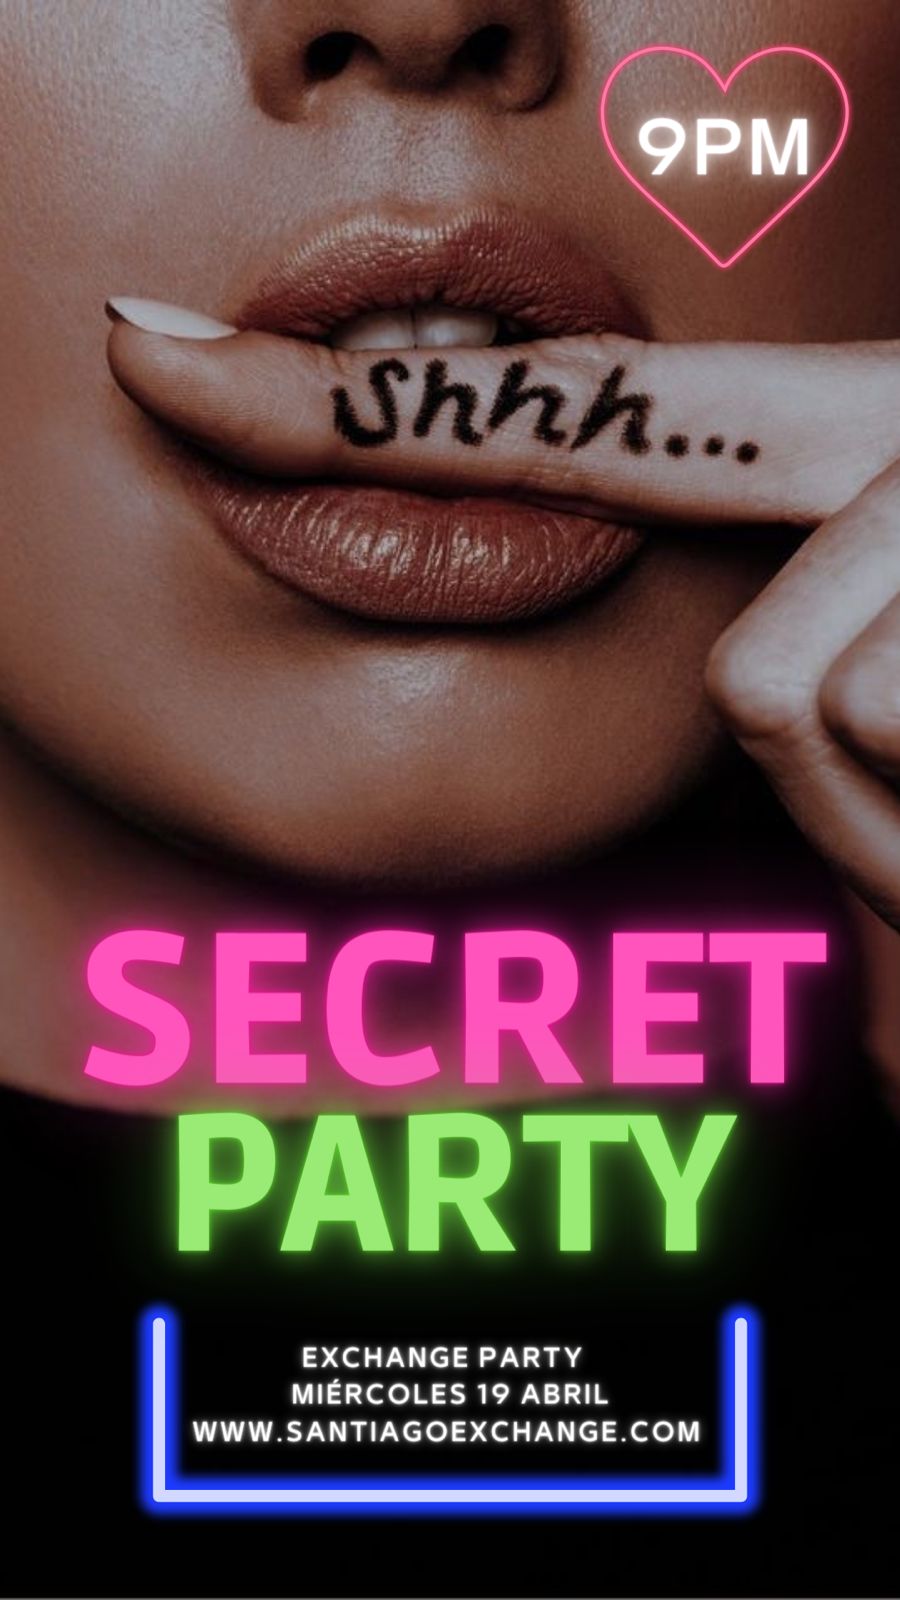 SEN - Secret Party → Secret Party - Best parties and nightlife in